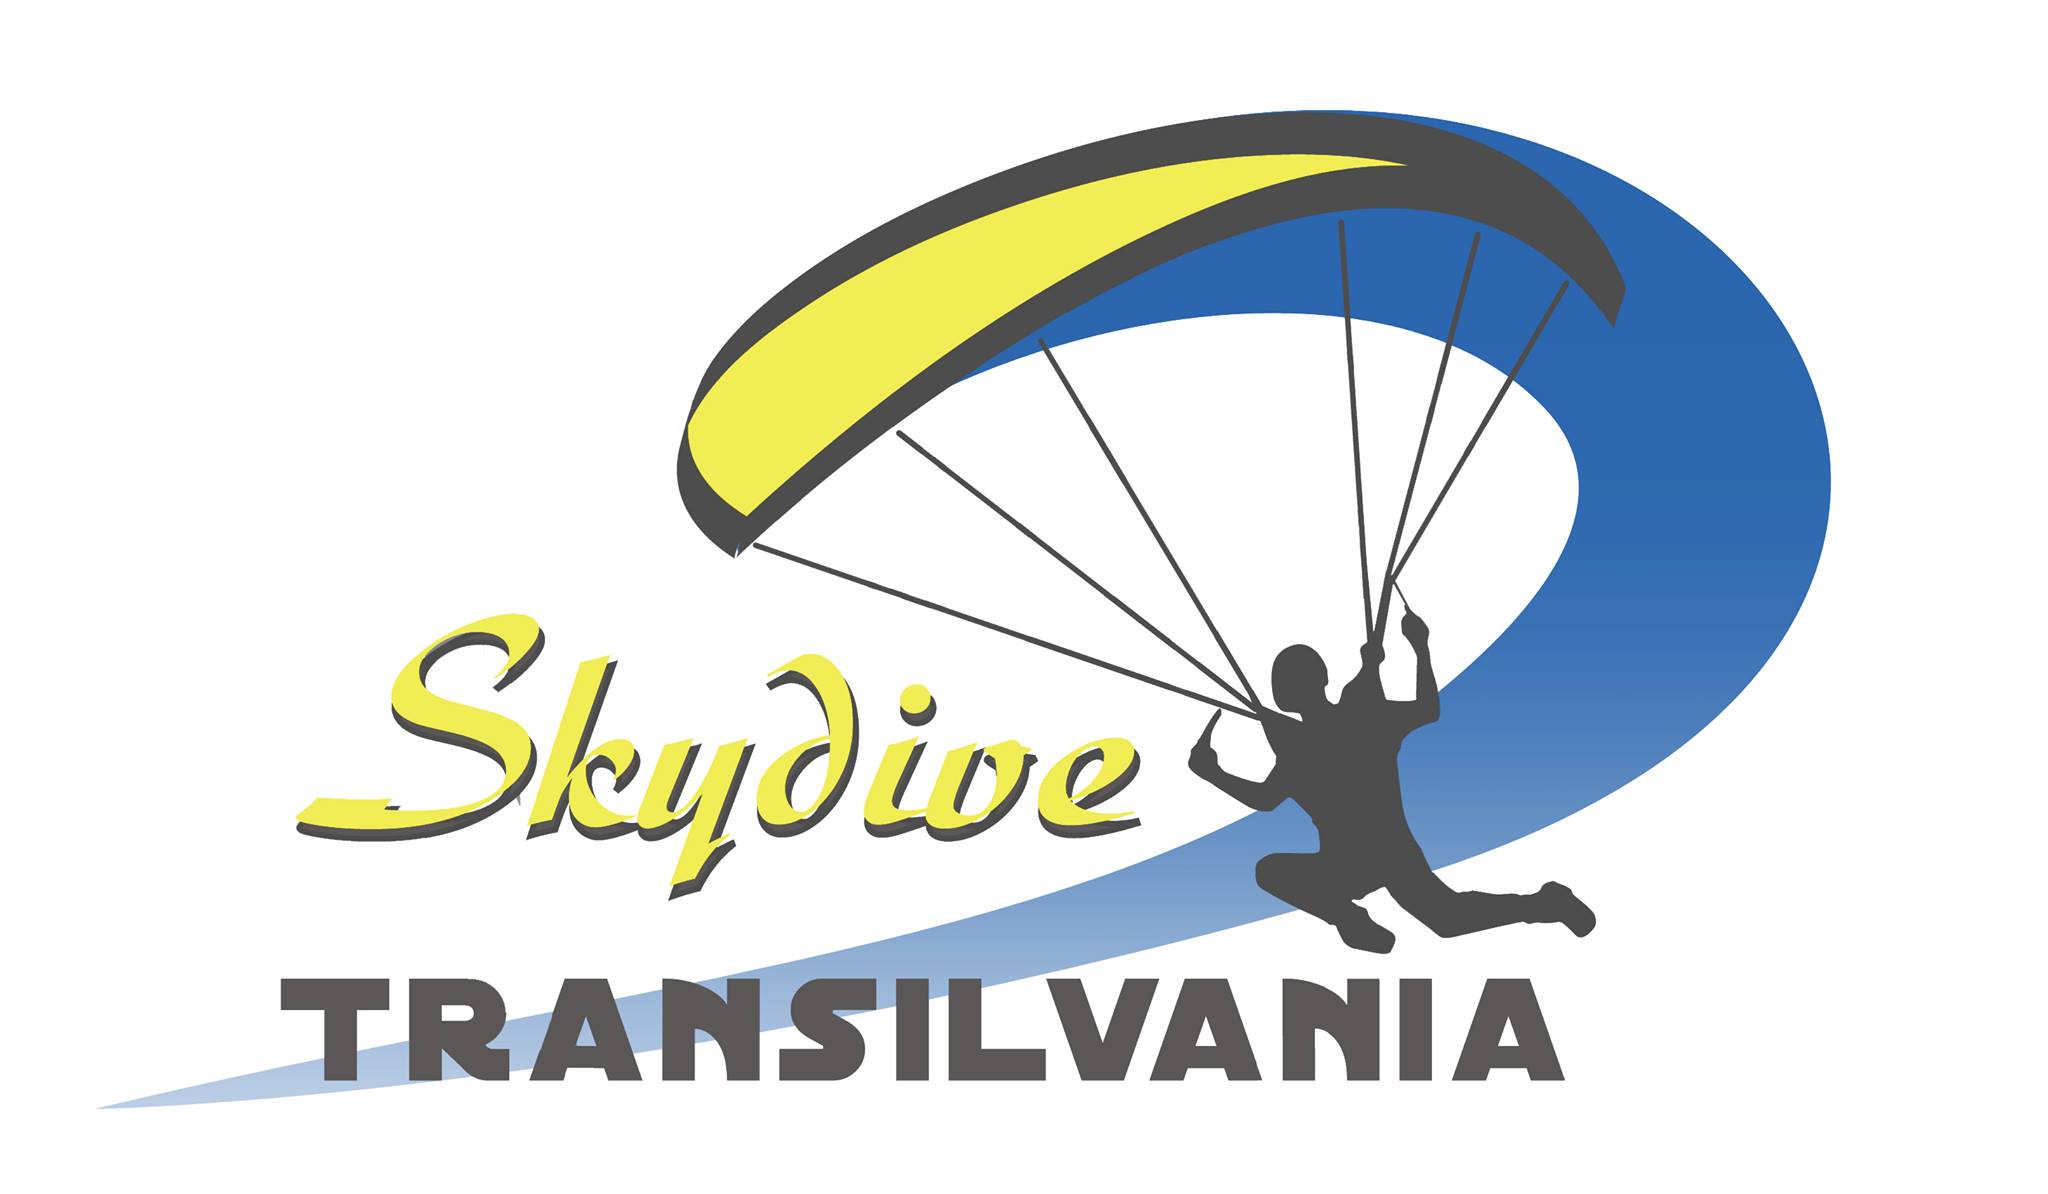 Asociația Club Sportiv Skydive Transilvania logo